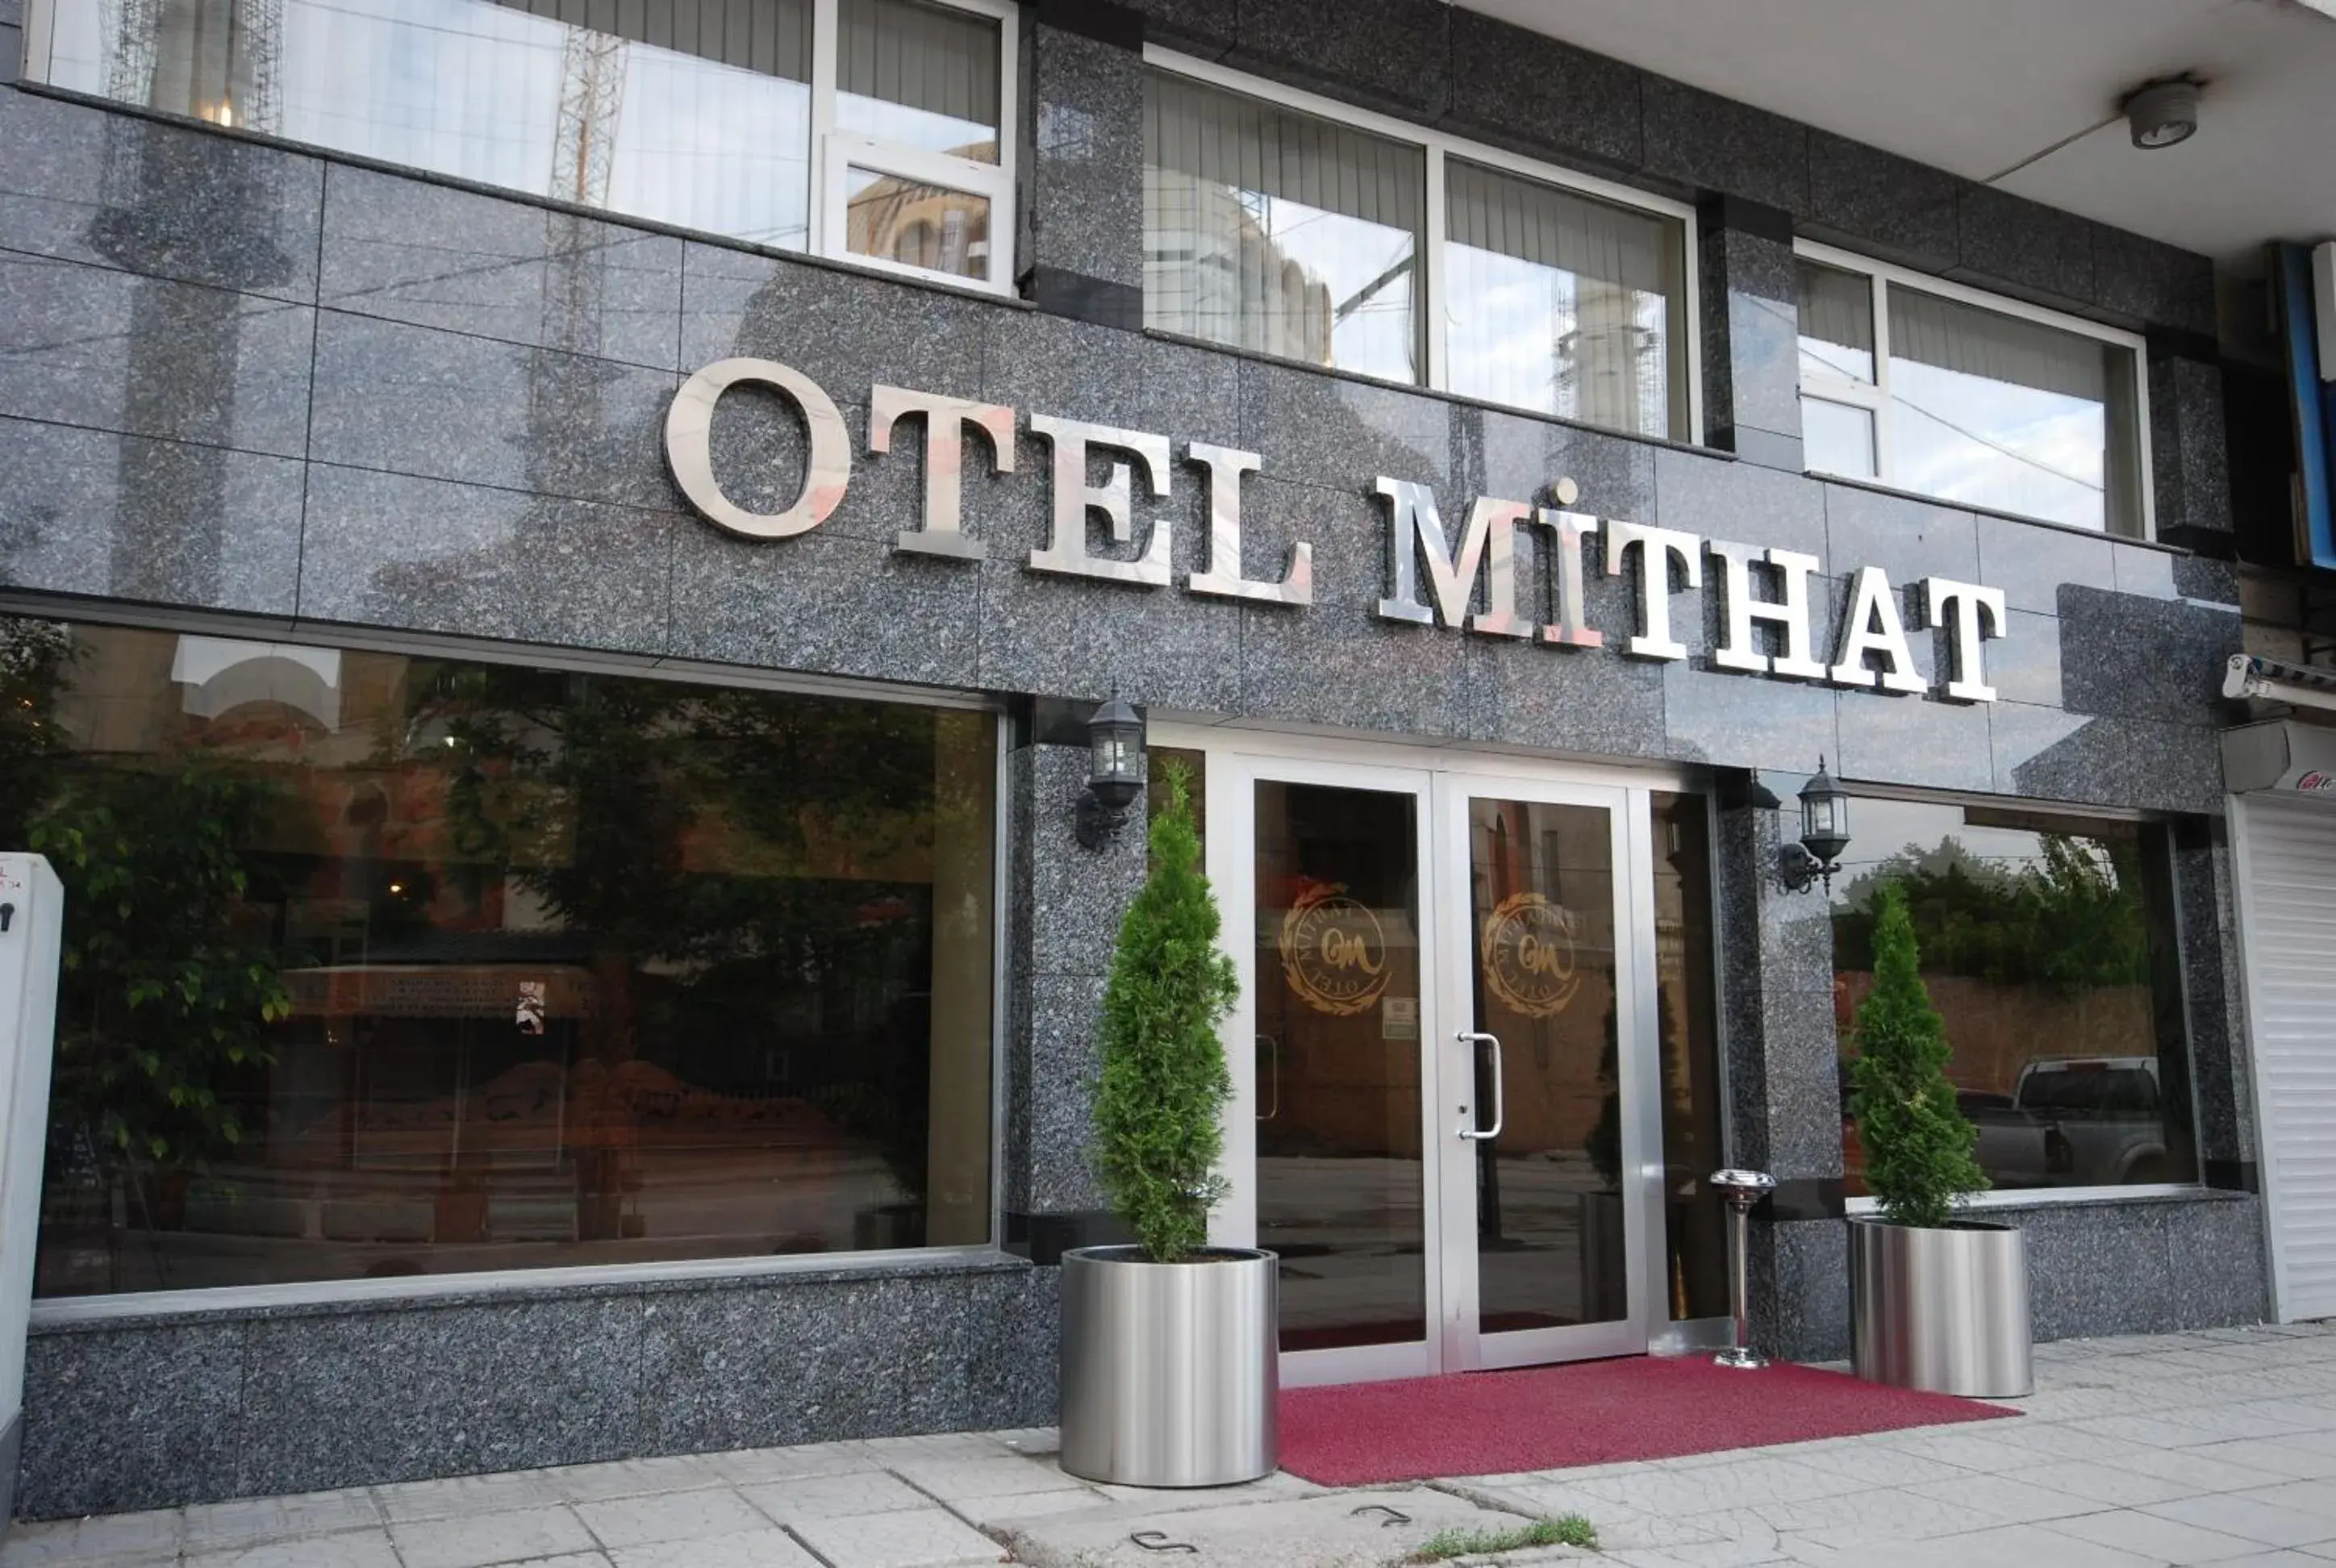 Facade/entrance in Hotel Mithat